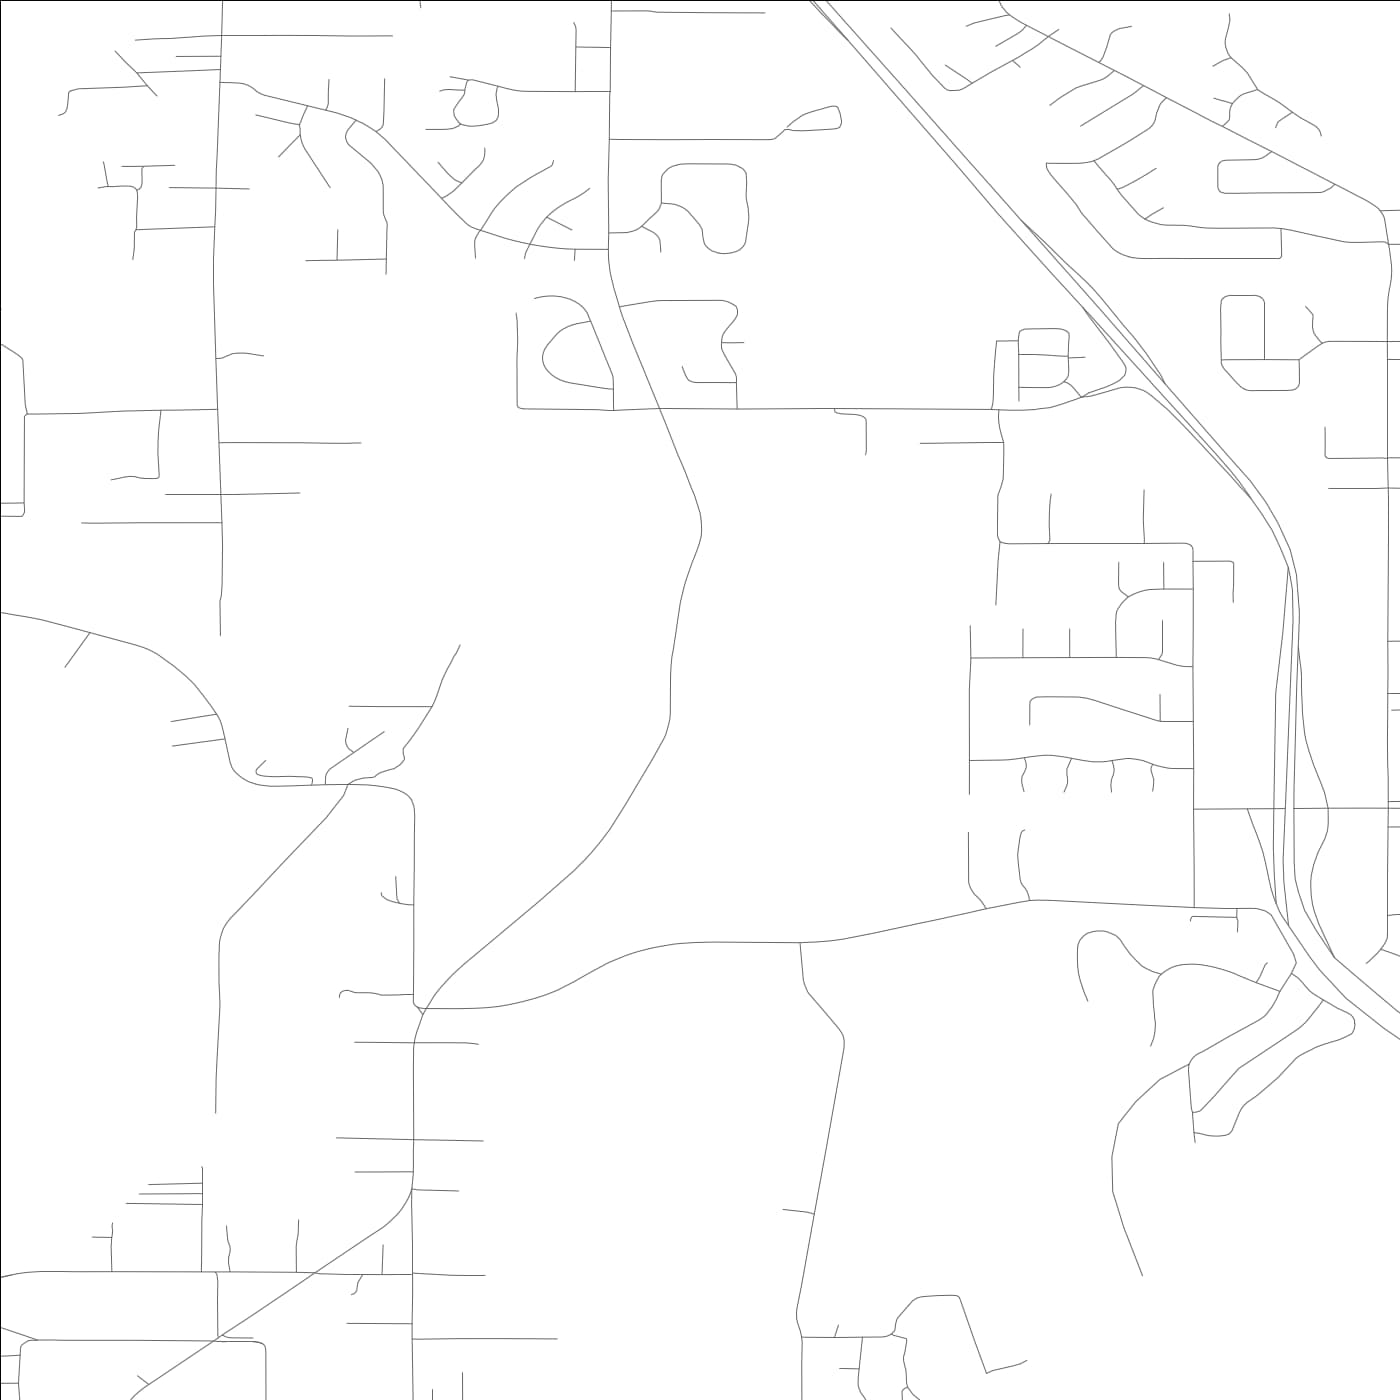 ROAD MAP OF WOLLOCHET, WASHINGTON BY MAPBAKES